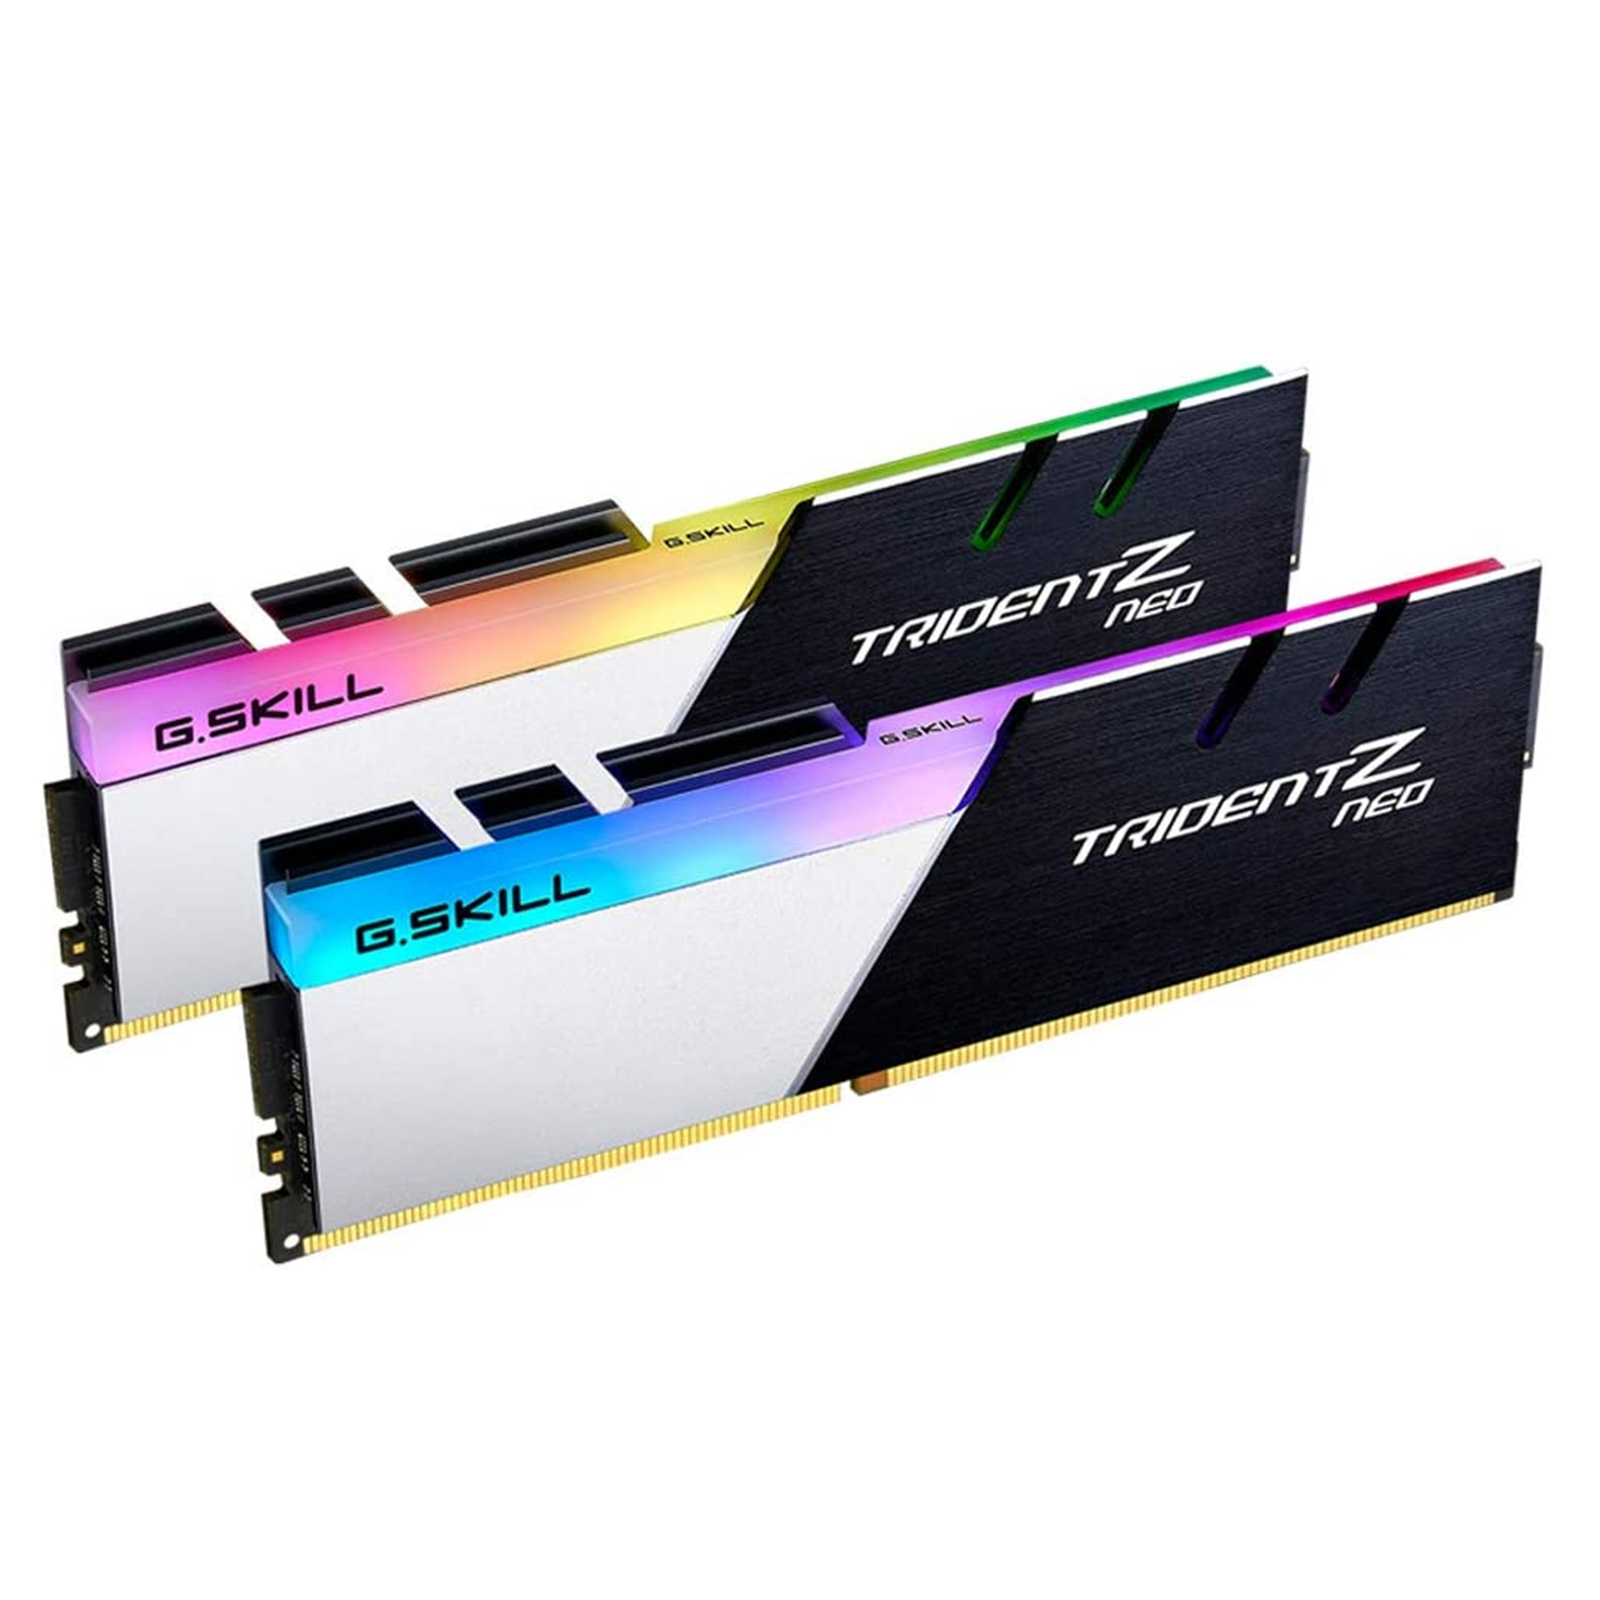 Buy the G.SKILL Trident Z Neo RGB 16GB DDR4 Desktop RAM Kit 2x 8GB - 3600MHz  -... ( F4-3600C18D-16GTZN ) online - PBTech.com/au